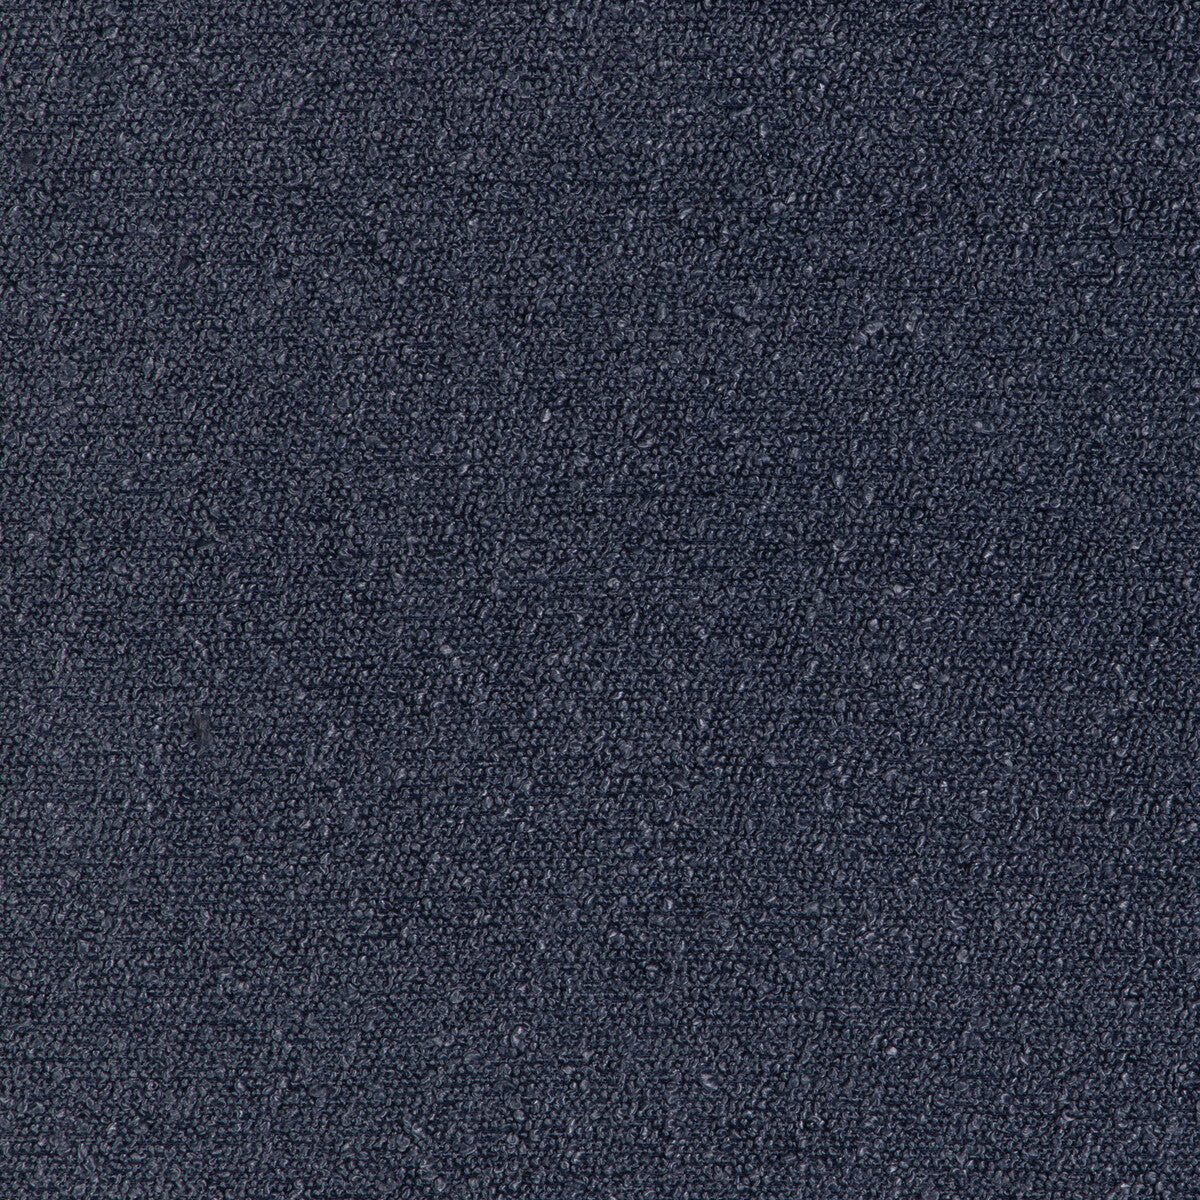 Kravet Smart fabric in 36987-50 color - pattern 36987.50.0 - by Kravet Smart